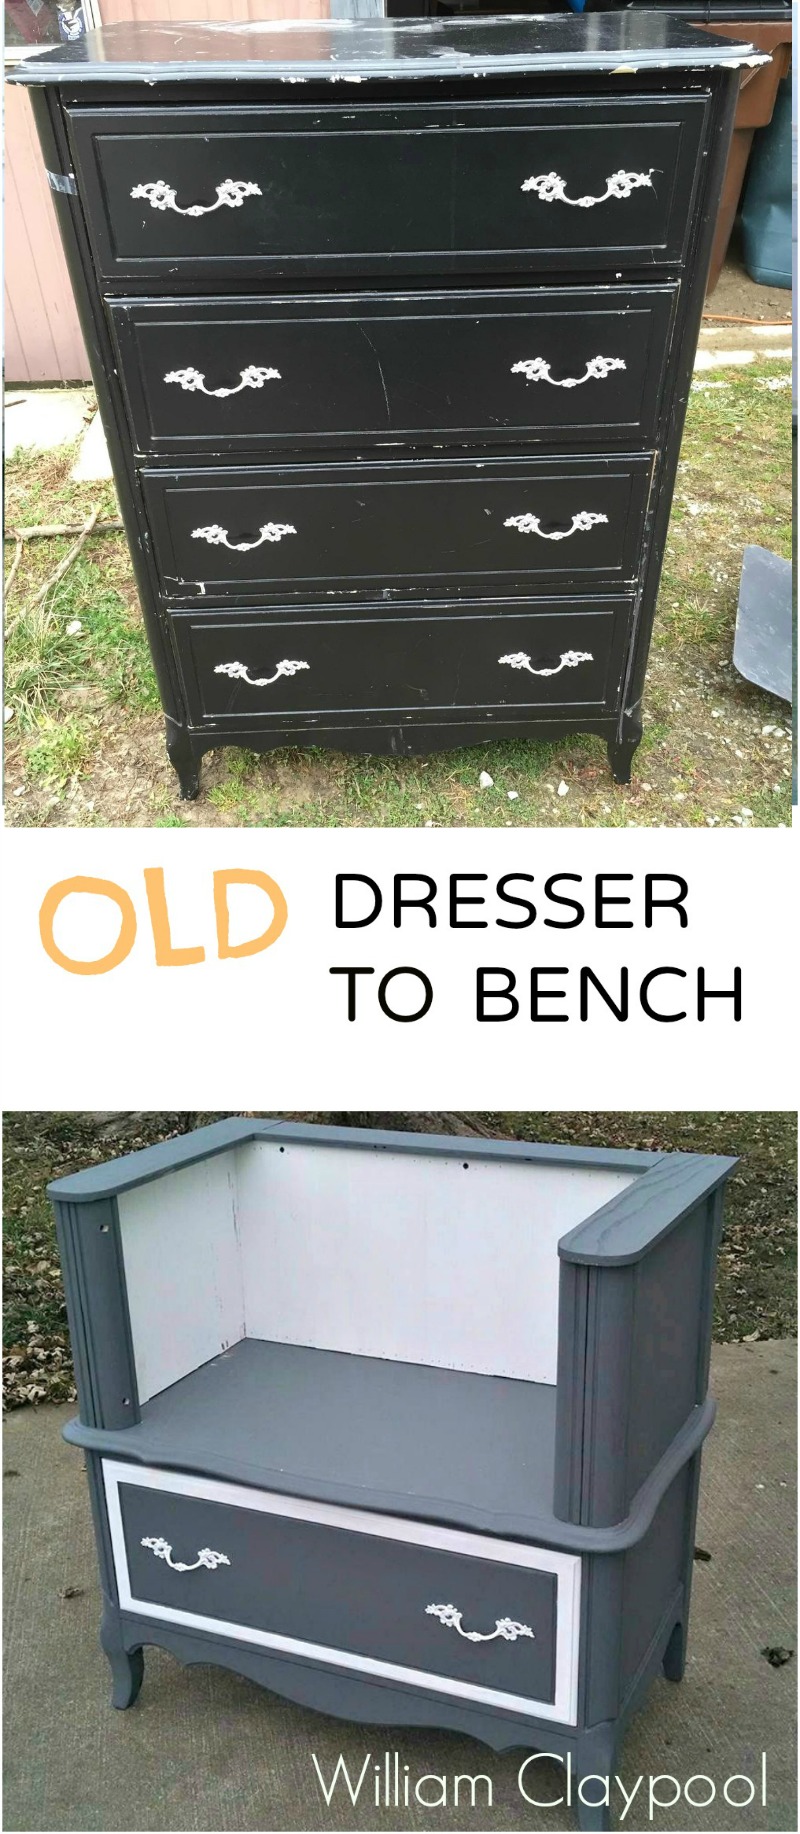 Old dresser to bench 1